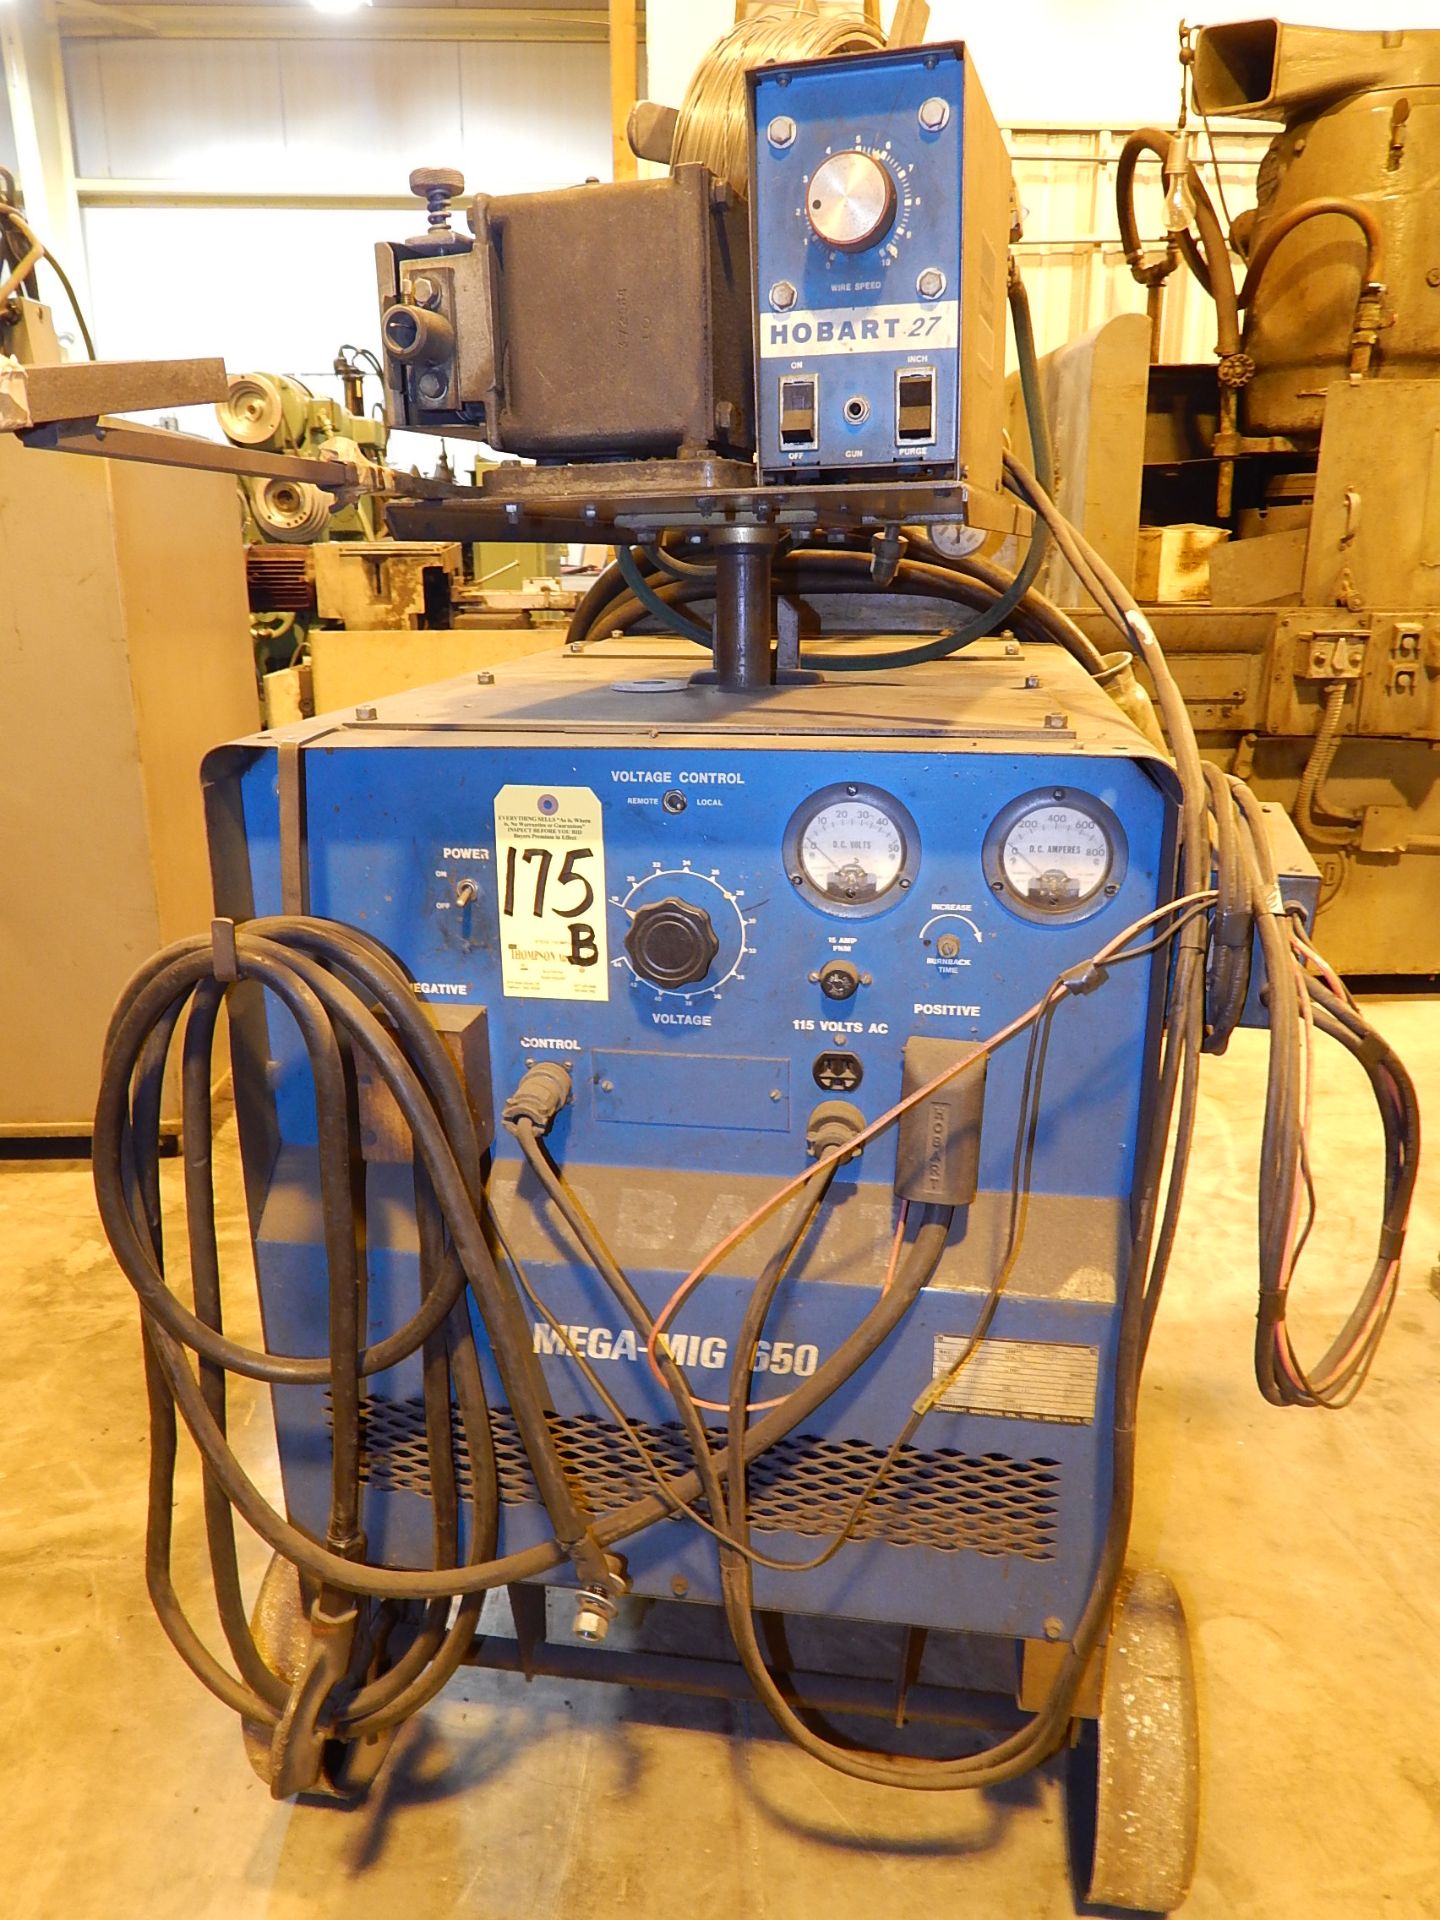 Hobart Mega-Mig 650 Mig welder, SN 77WS12994, with Hobart 27 Wire Feeder, 230/460 volt